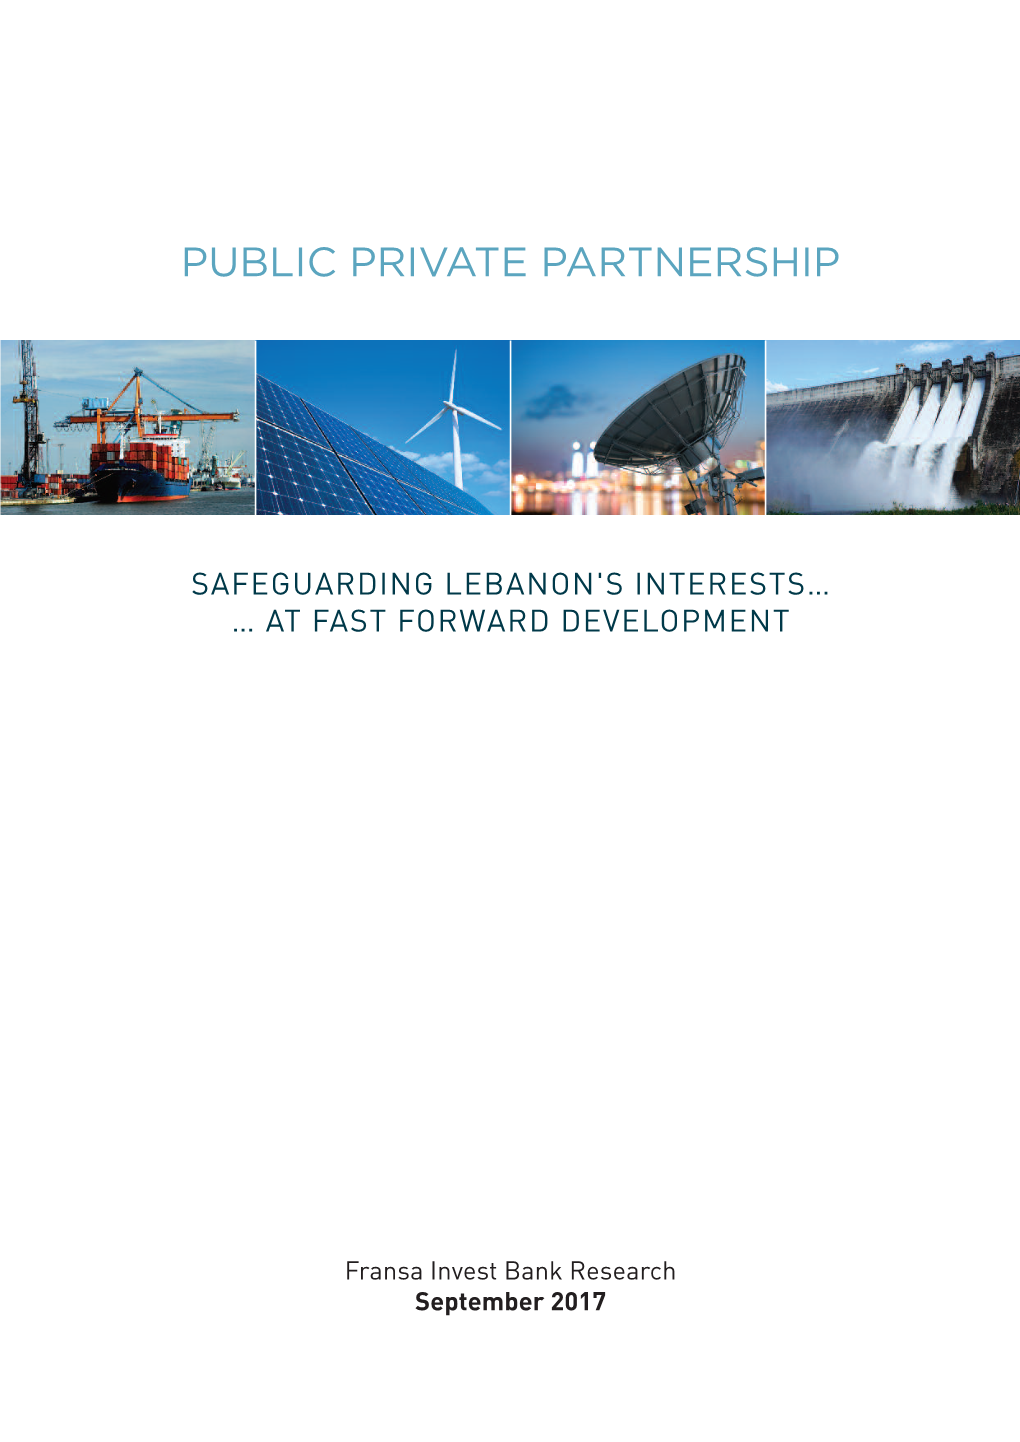 Public Private Partnership Report 2017